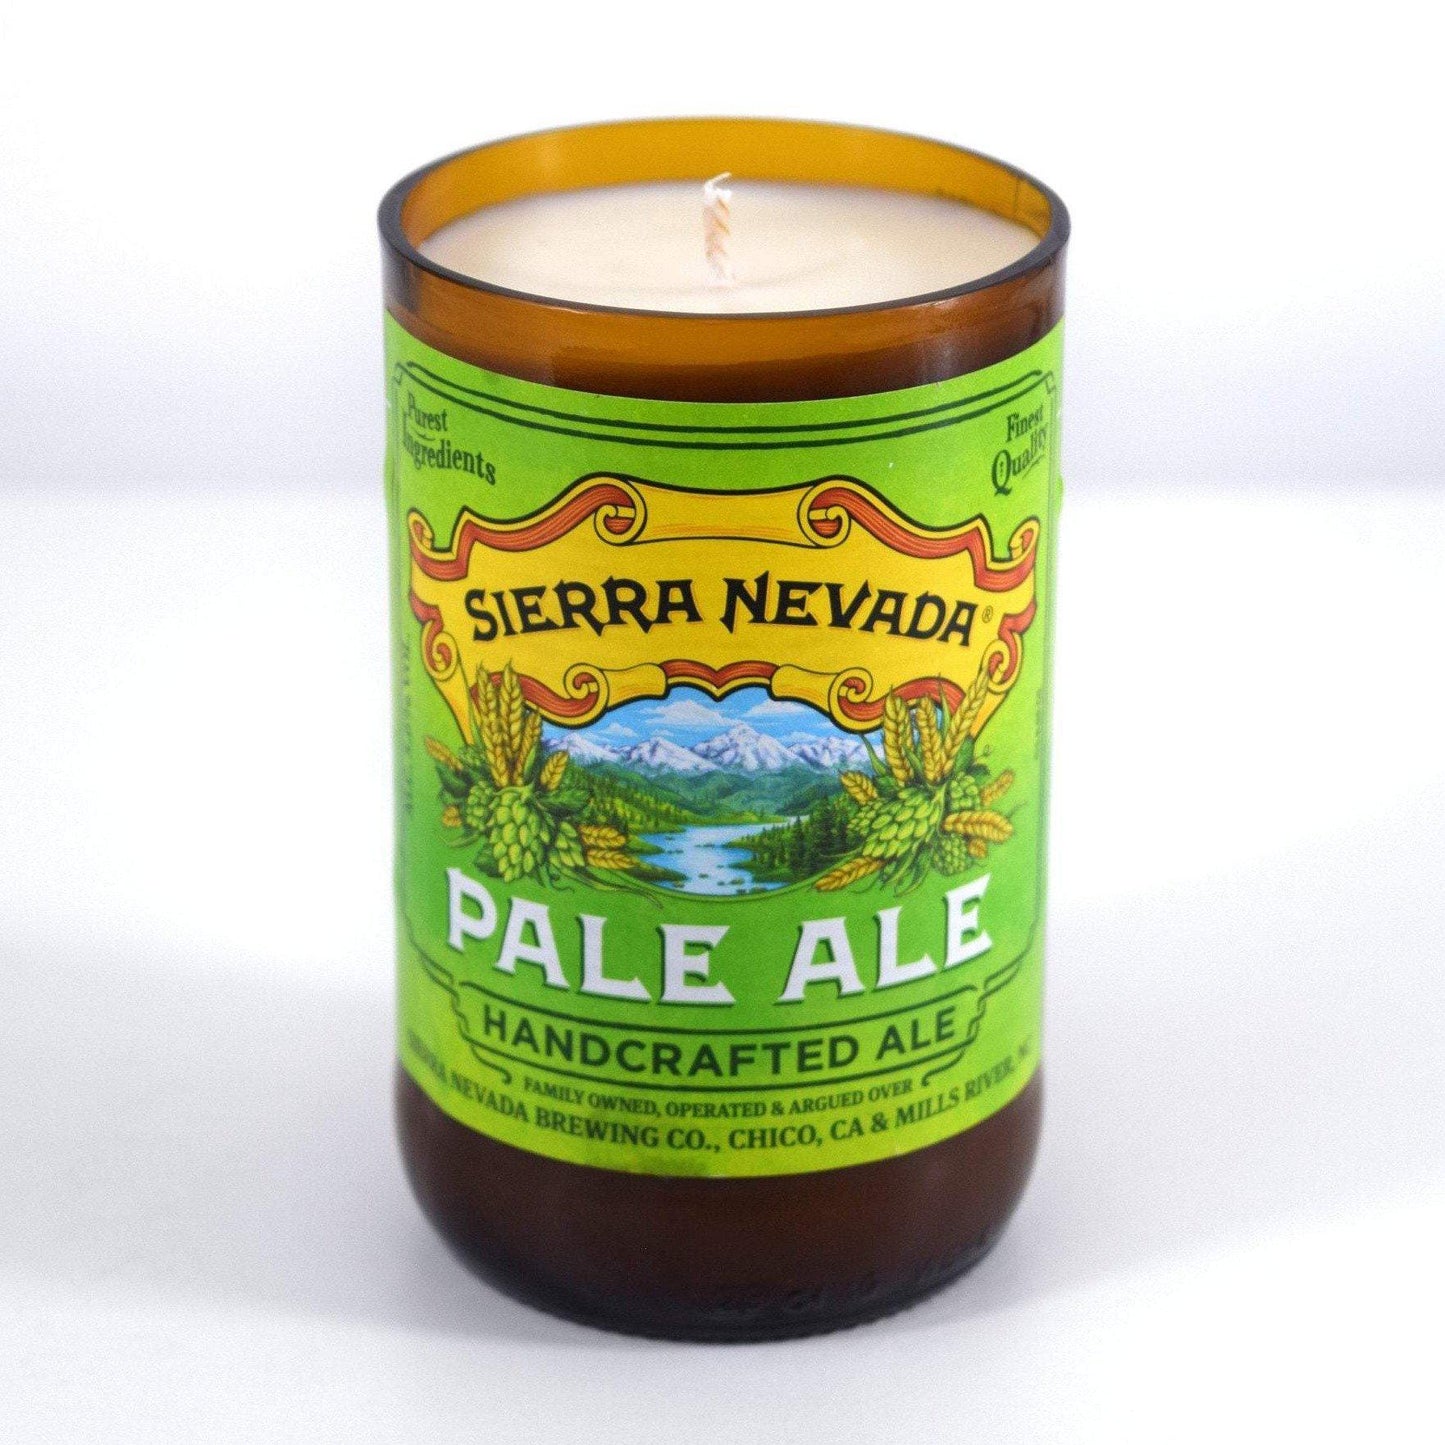 Sierra Nevada Pale Ale Beer Bottle Candle-Beer & Ale Bottle Candles-Adhock Homeware